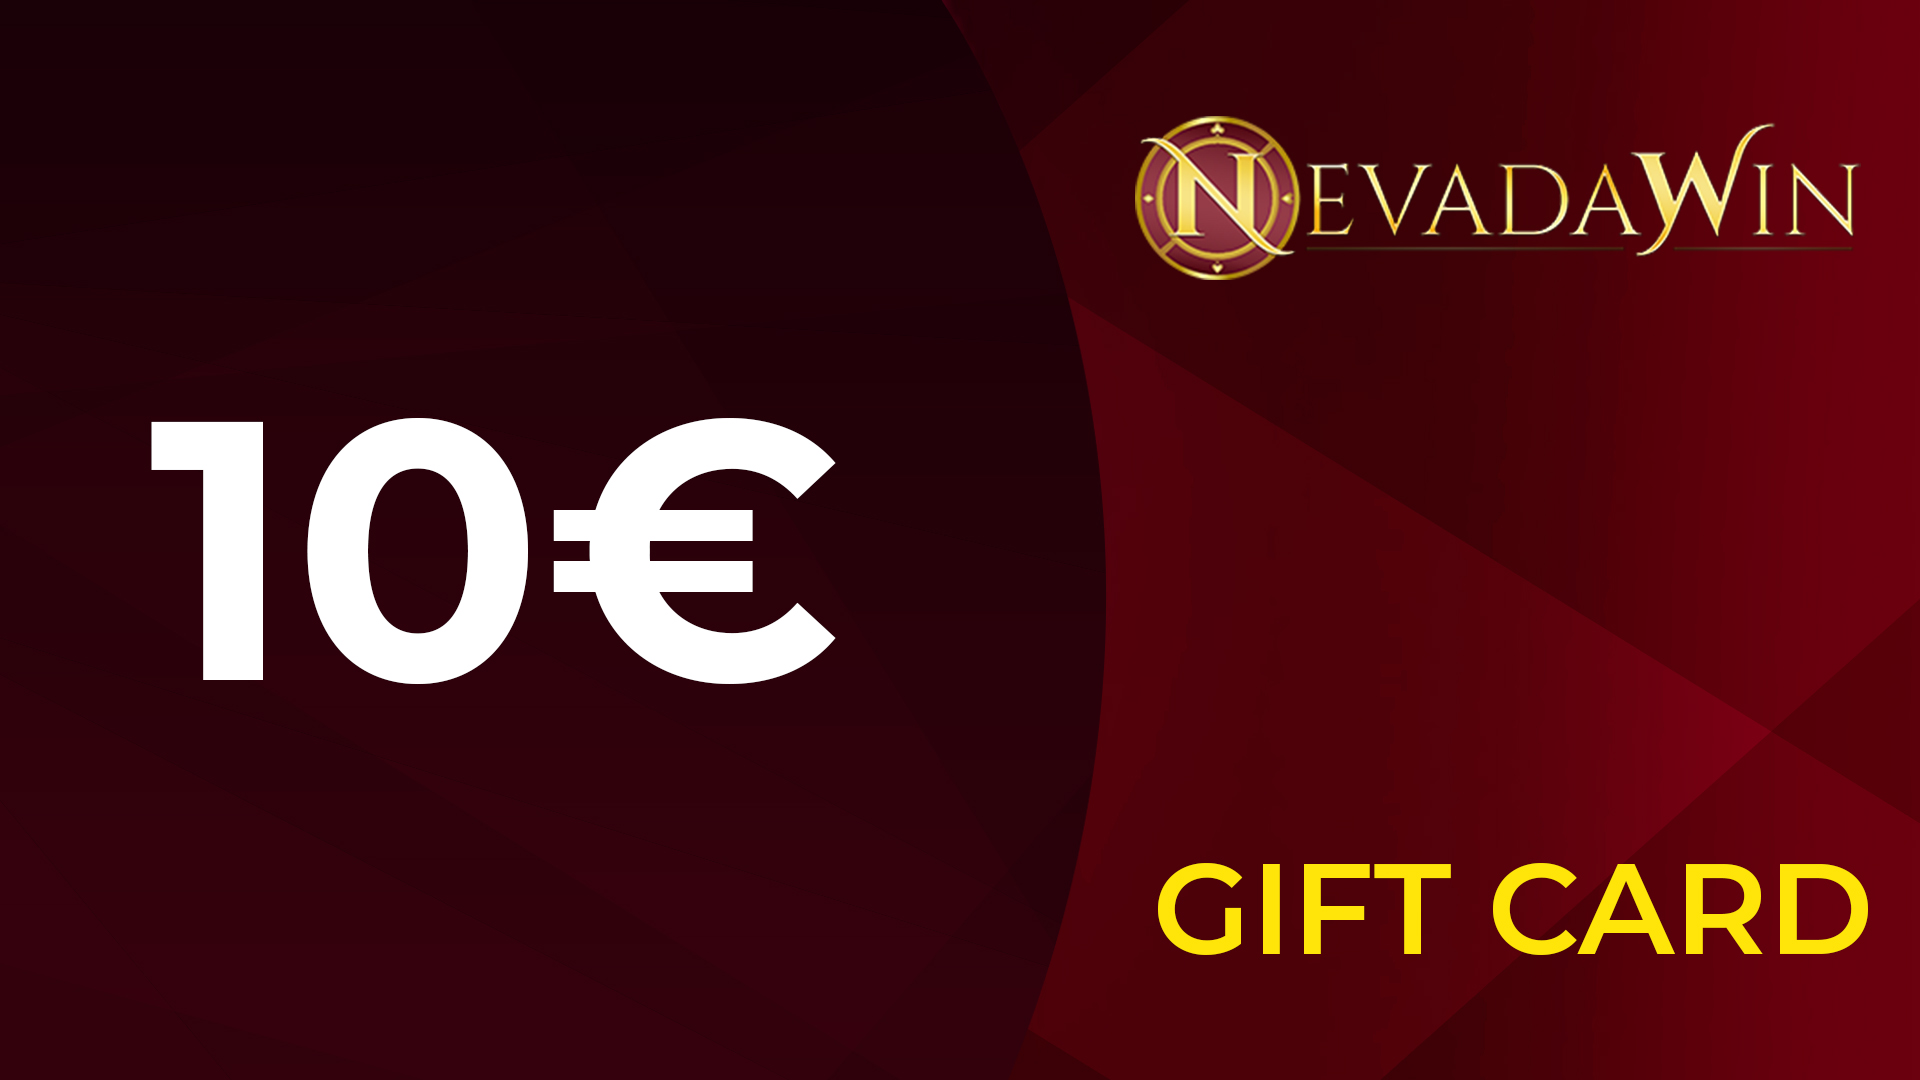 NevadaWin €10 Giftcard (10.99$)